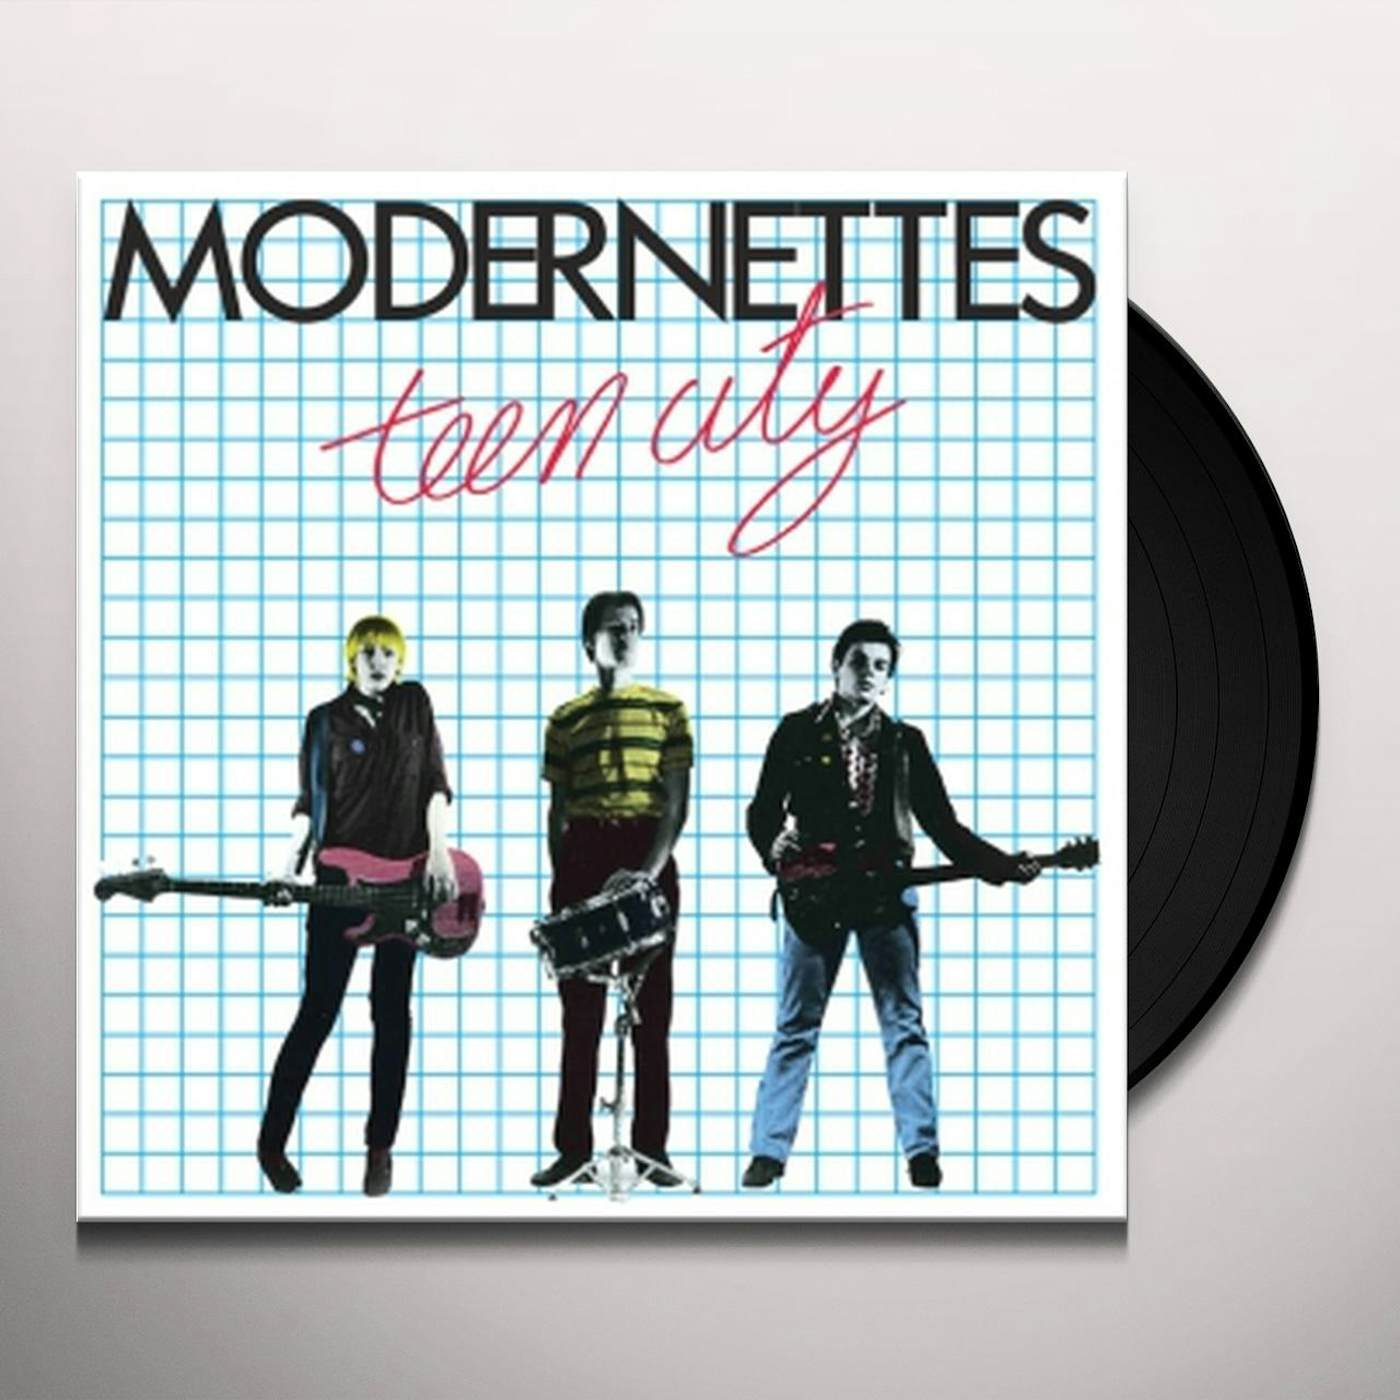 Modernettes TEEN CITY-35TH ANNIVERSARY Vinyl Record